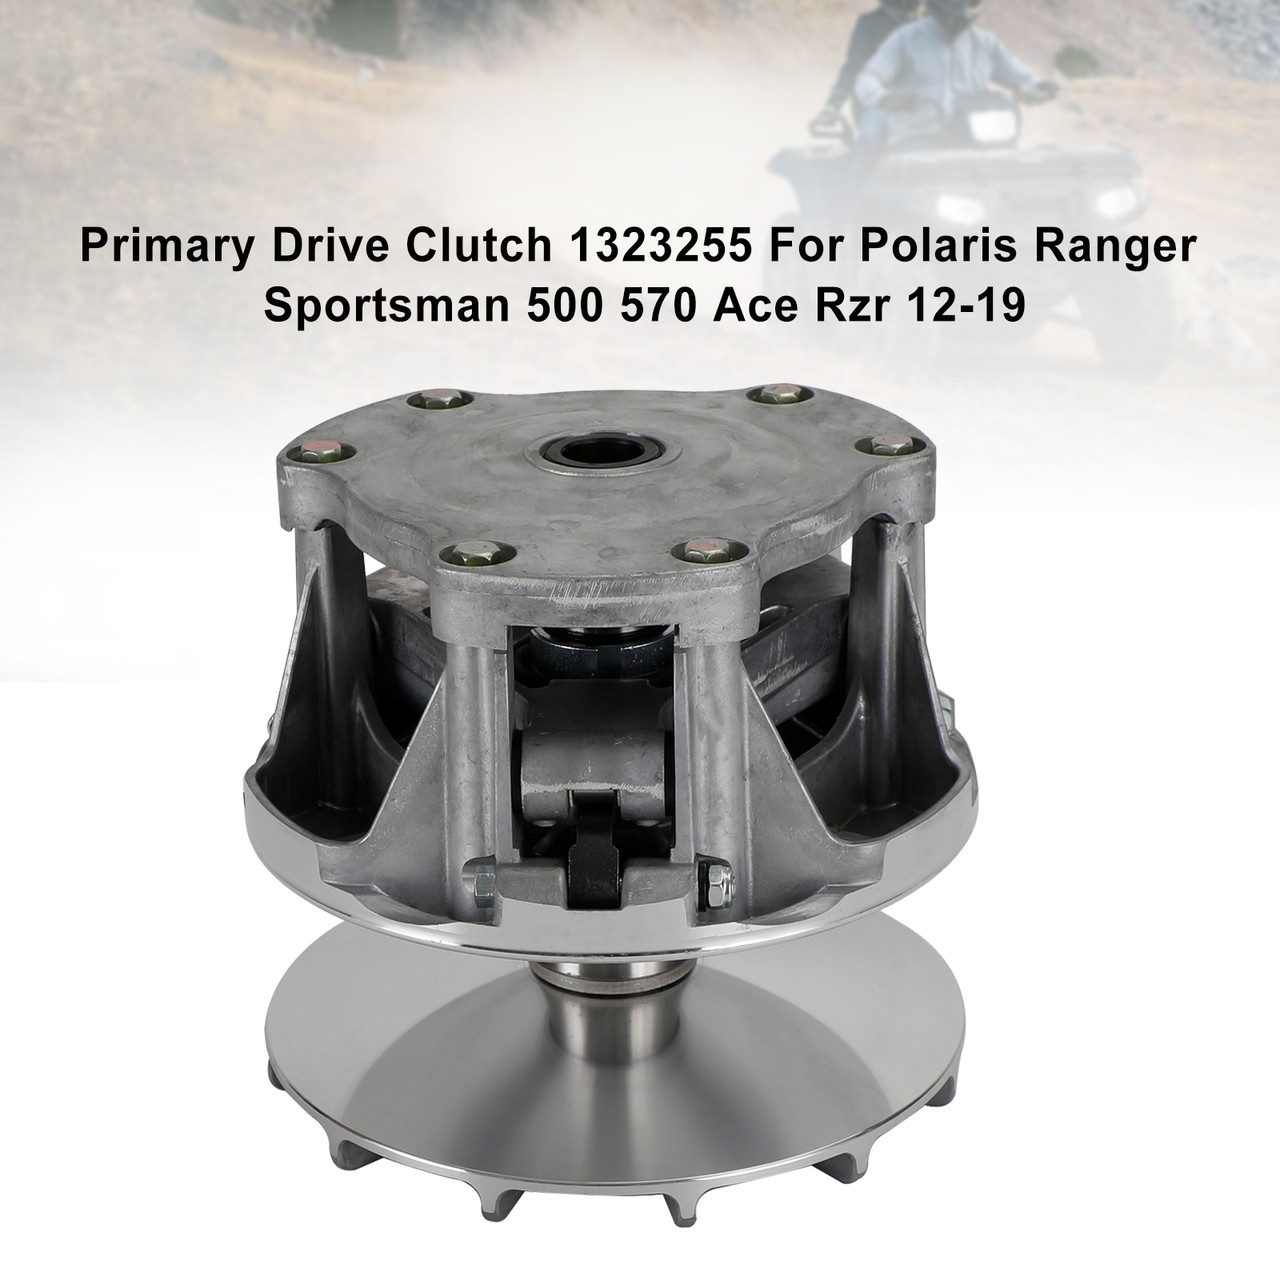 Primary Drive Clutch 1323255 For Polaris Ranger Sportsman 500 570 Ace Rzr 12-19